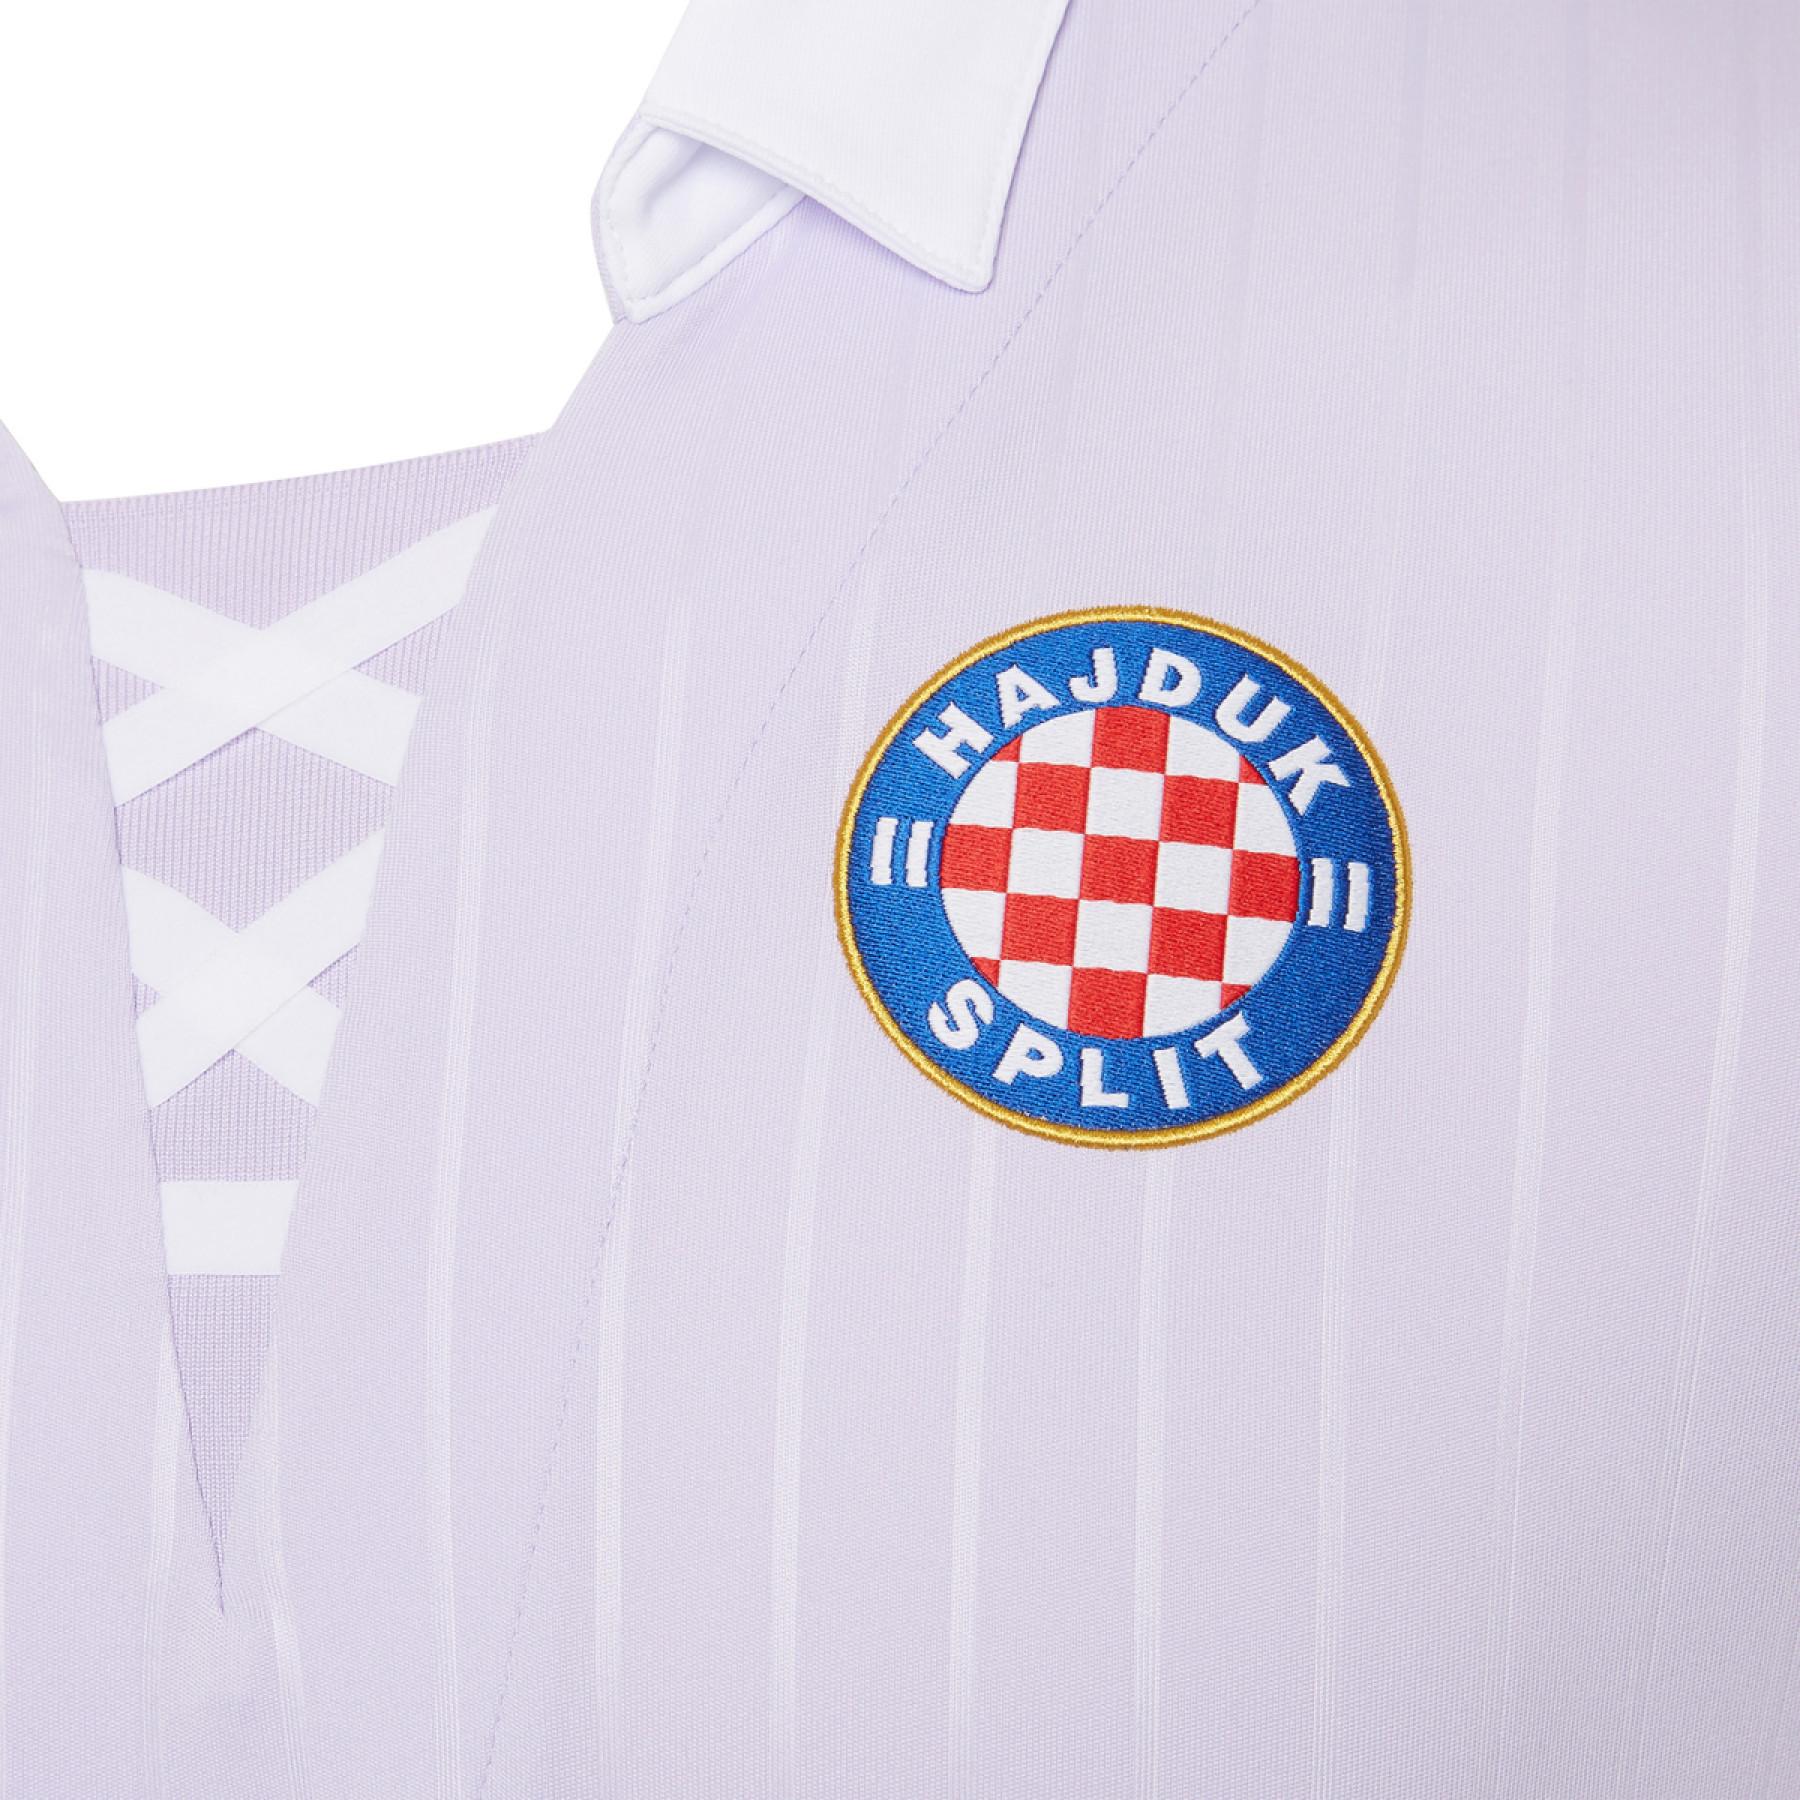 Terceira camisola Hajduk Split 2020/21